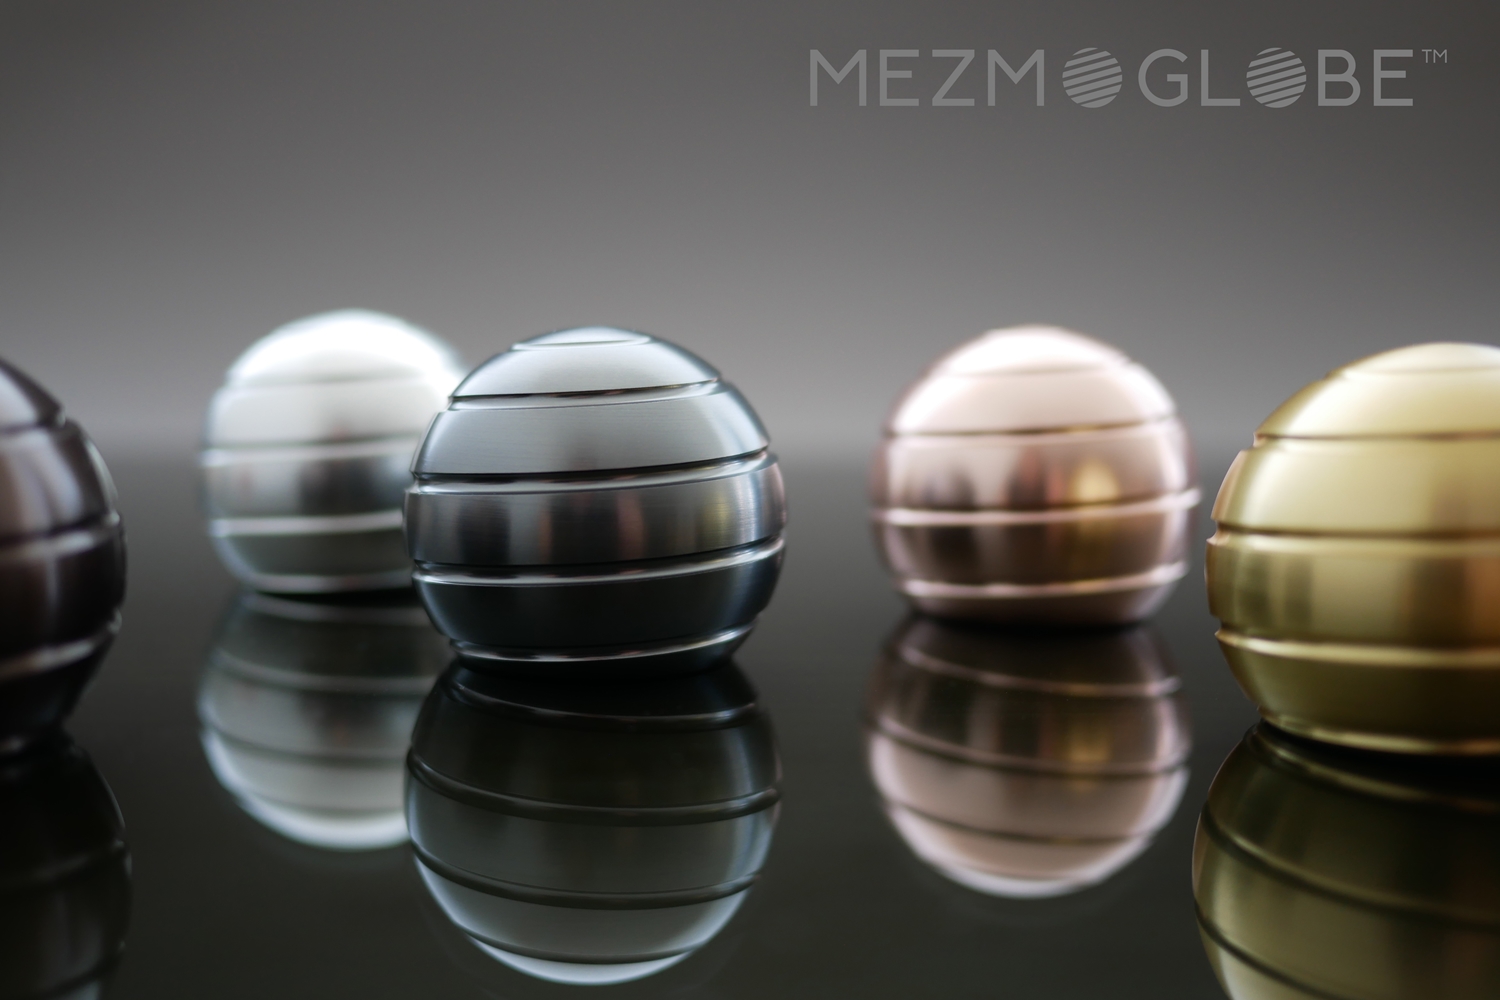 mezmoglobe spinning desk toy kickstarter globe2